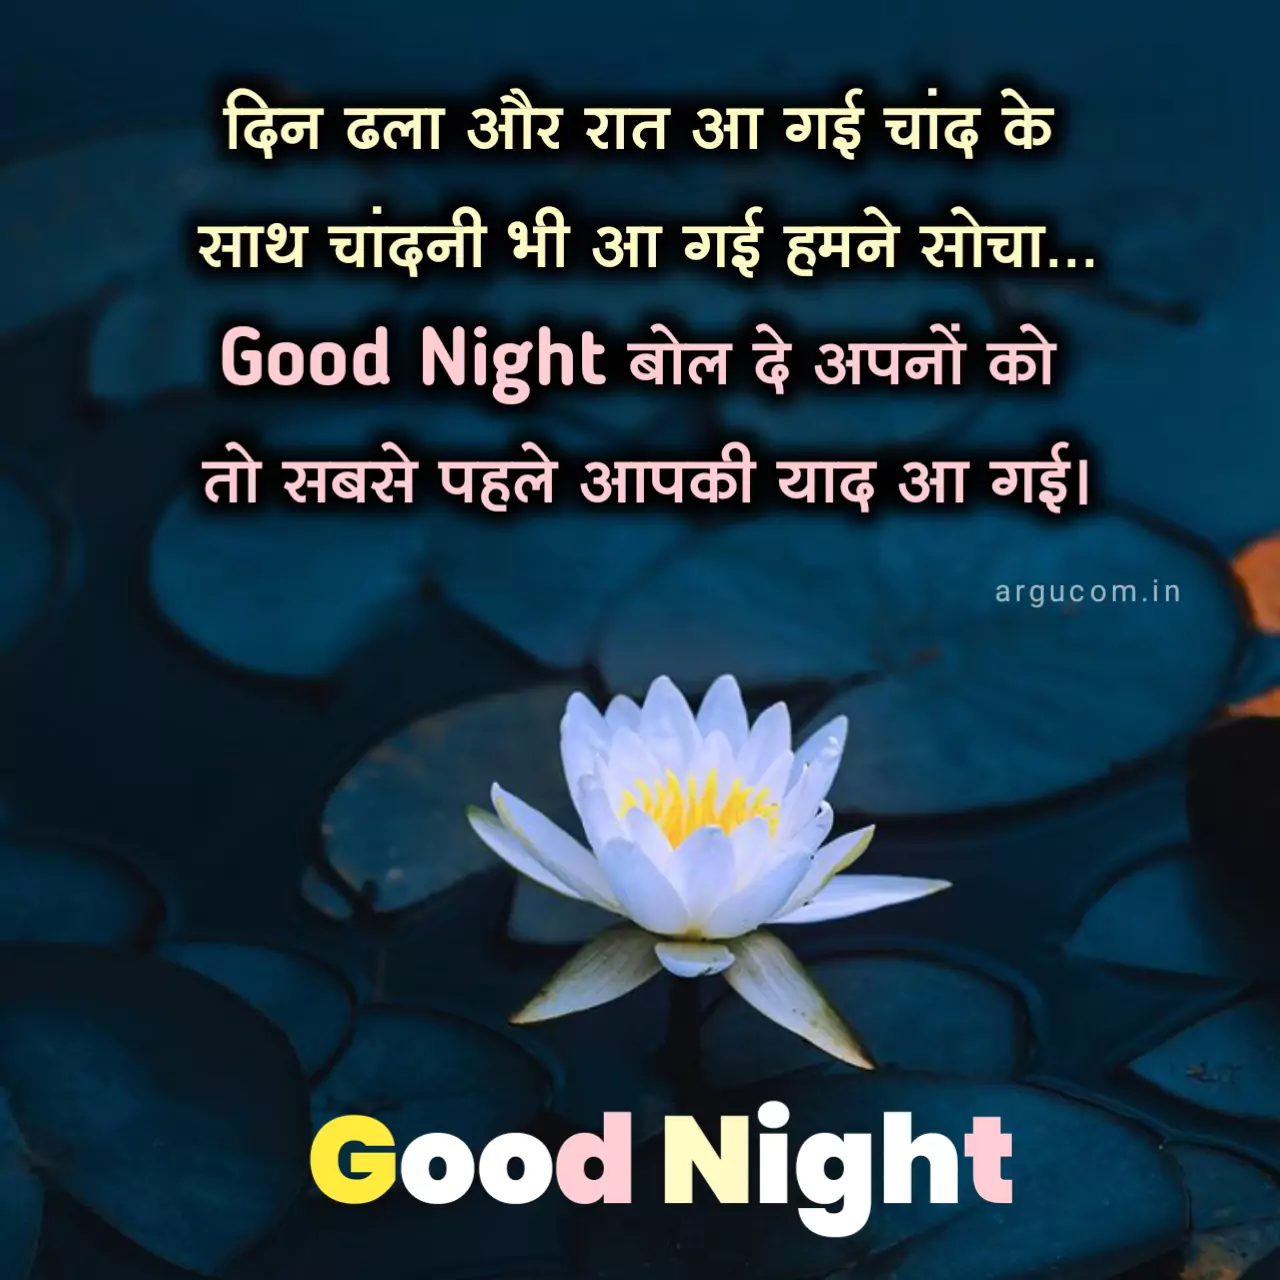 Good Night Quotes In Hindi Images , शुभ रात्रि कोट्स हिंदी